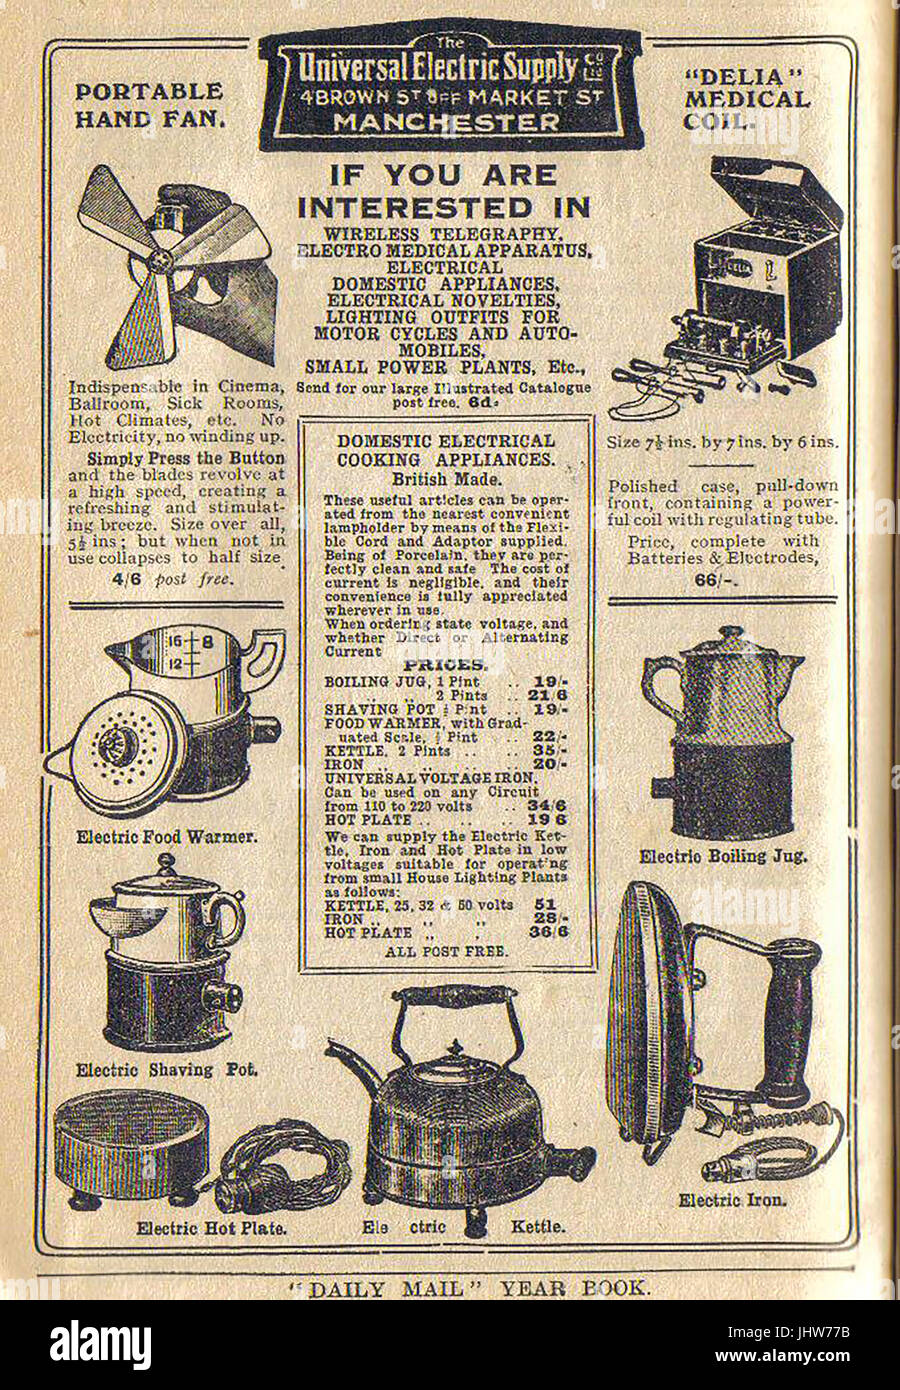 1922 advertisement -Universal Electric Supply Manchester UK Stock Photo